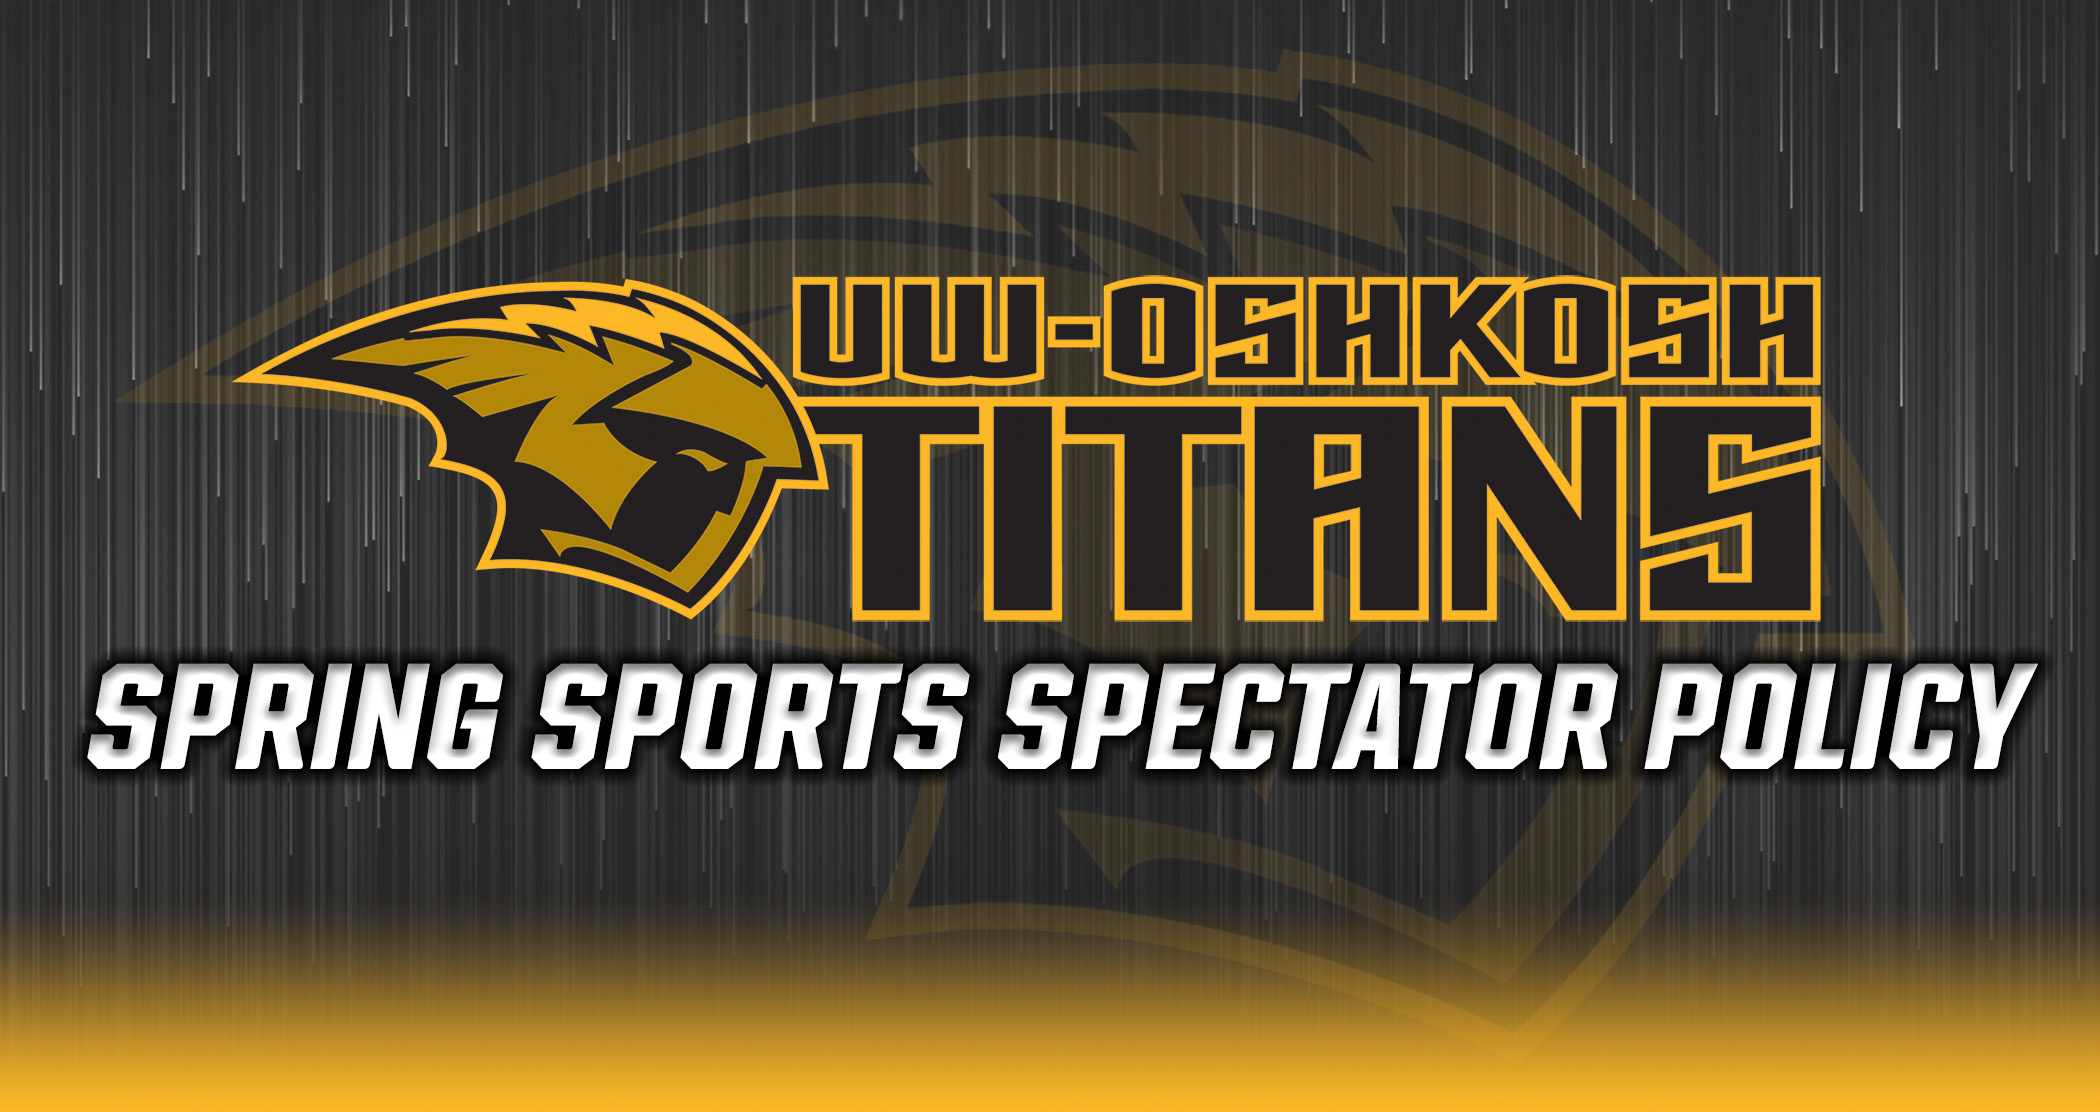 UW-Oshkosh Reveals Home Spectator Policy For Spring Sports